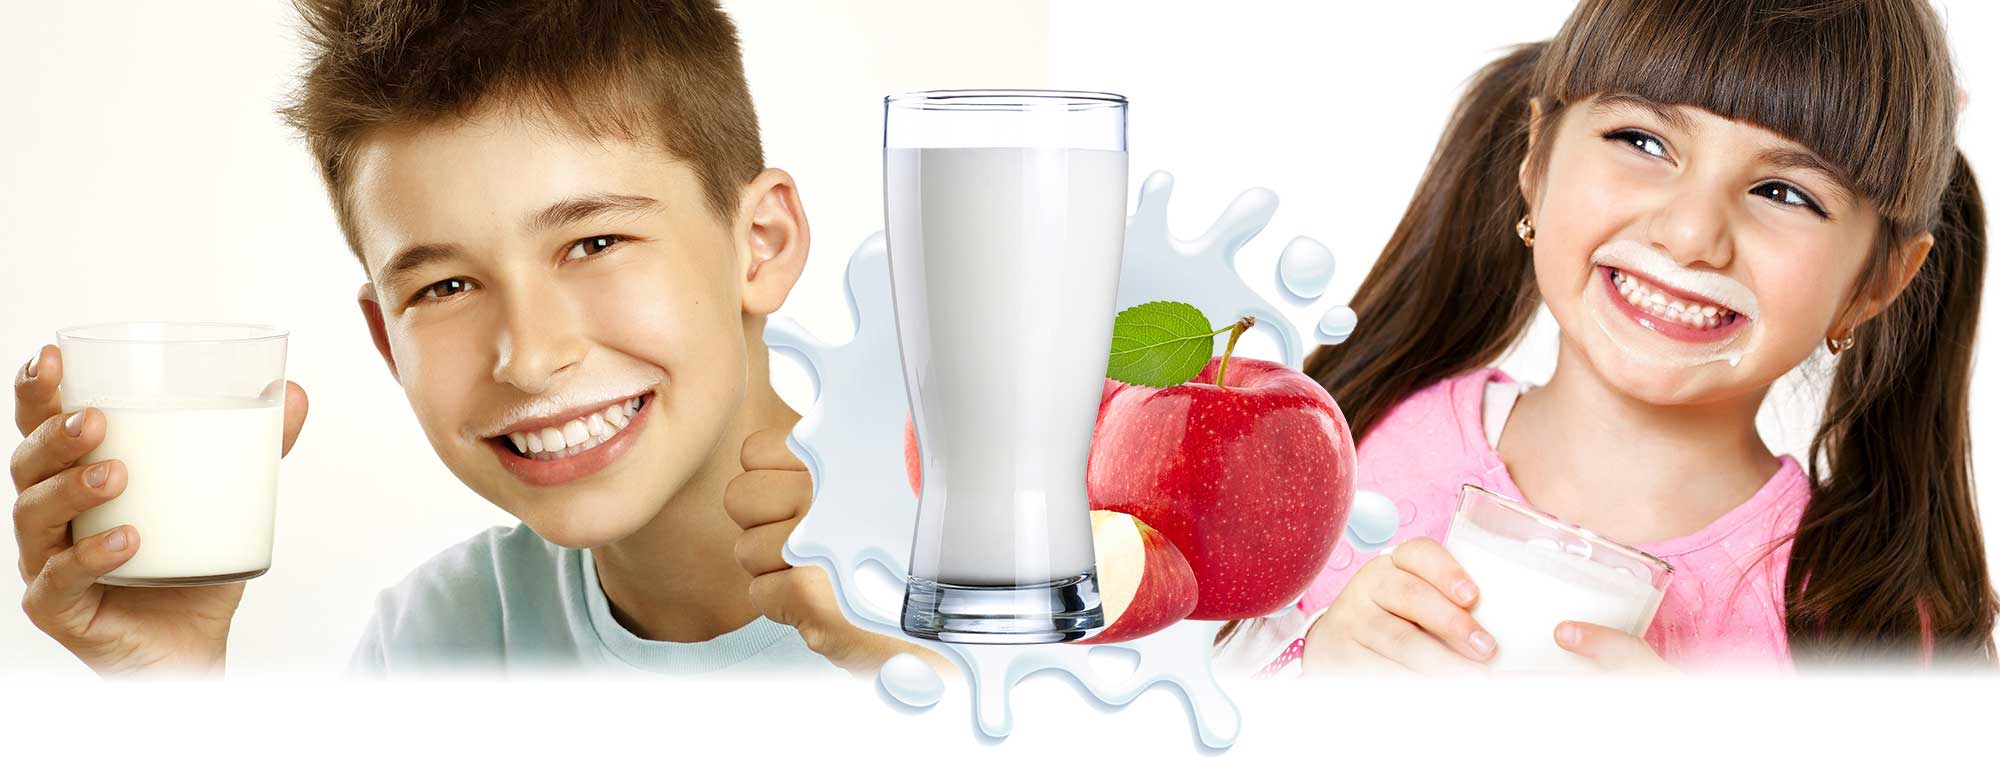 mleko i owoce w szkole